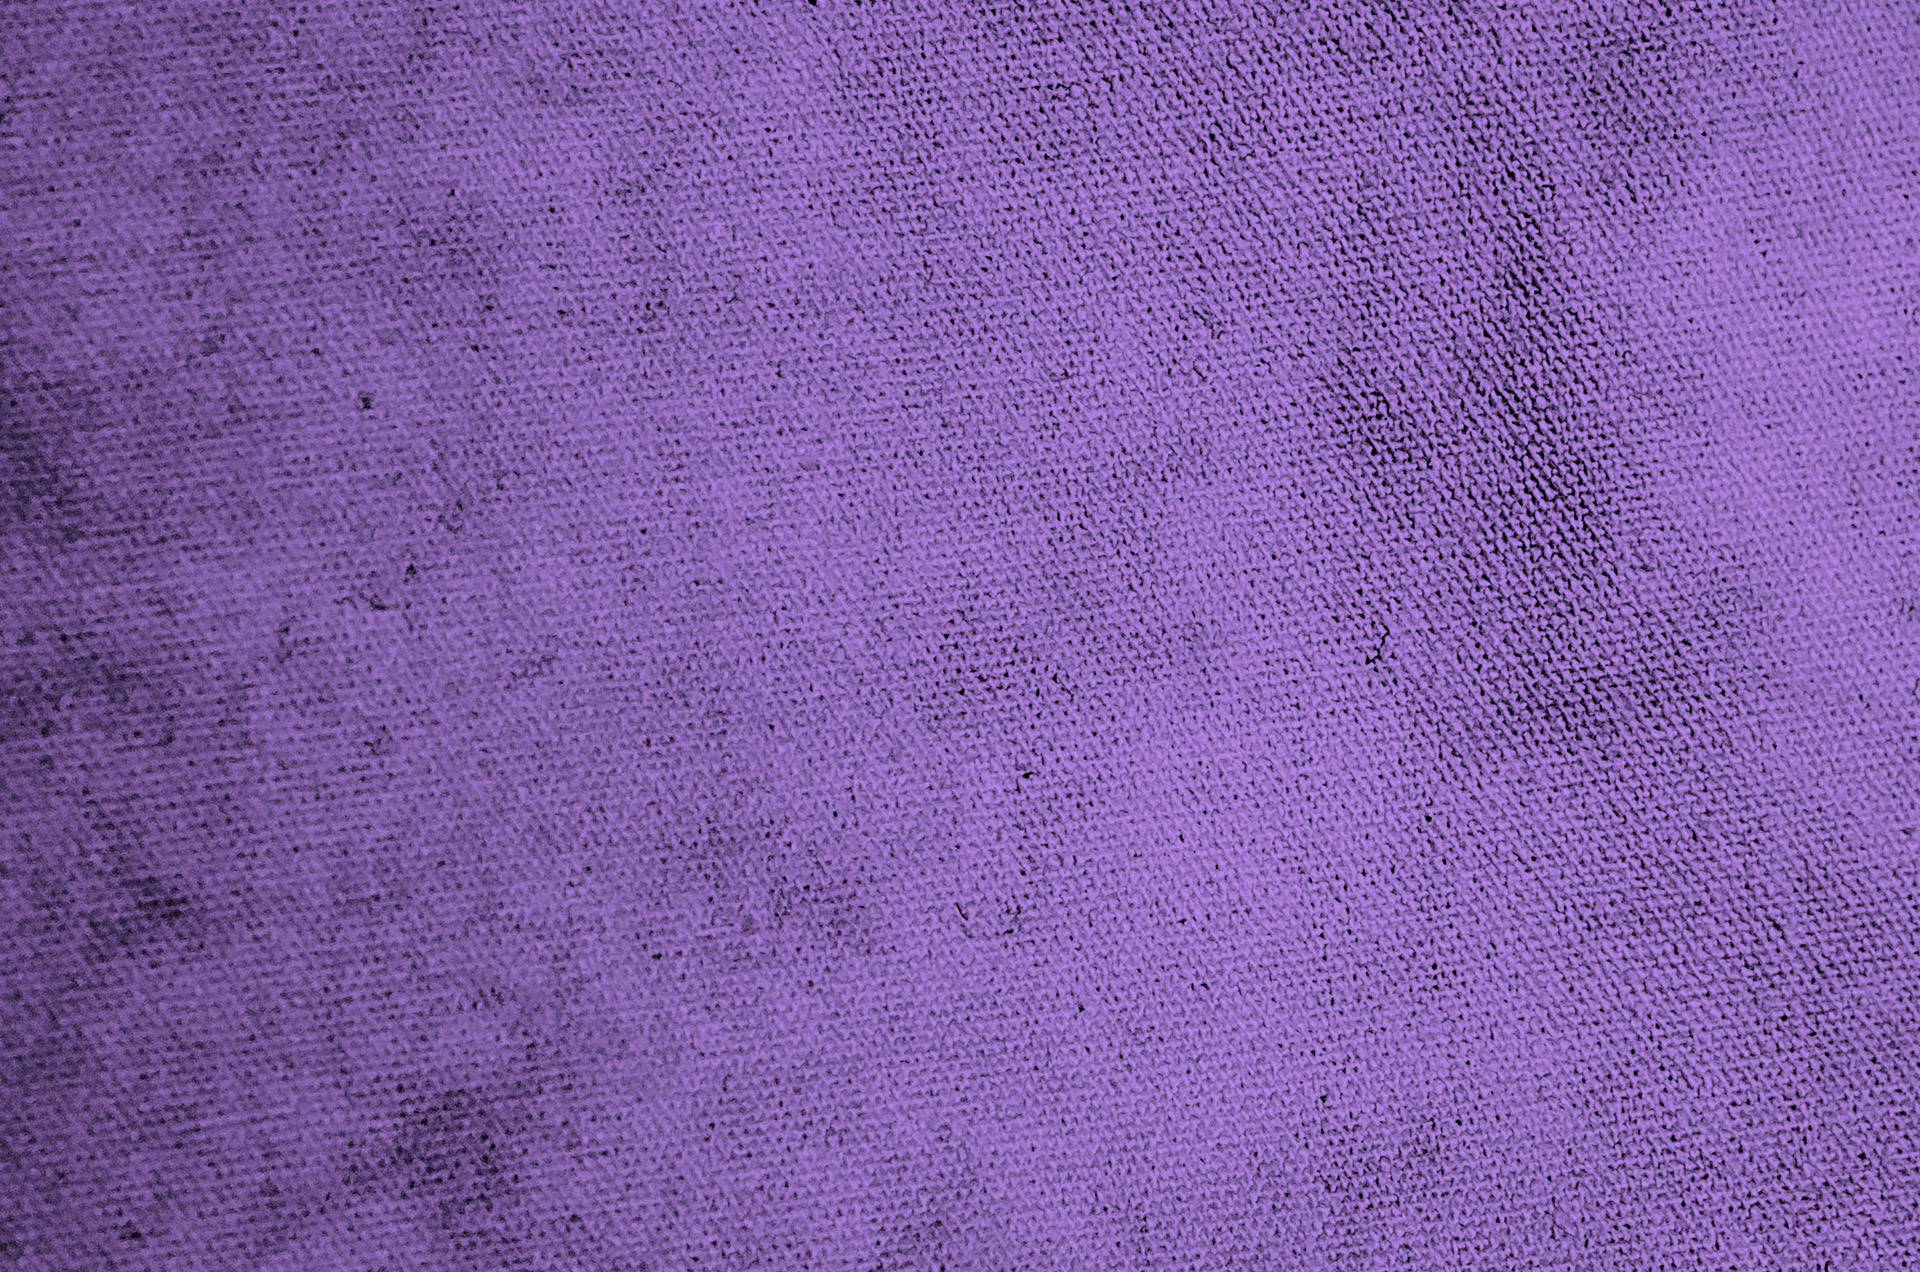 Purple Background 54 216718 Image HD Wallpaper. Wallfoy.com